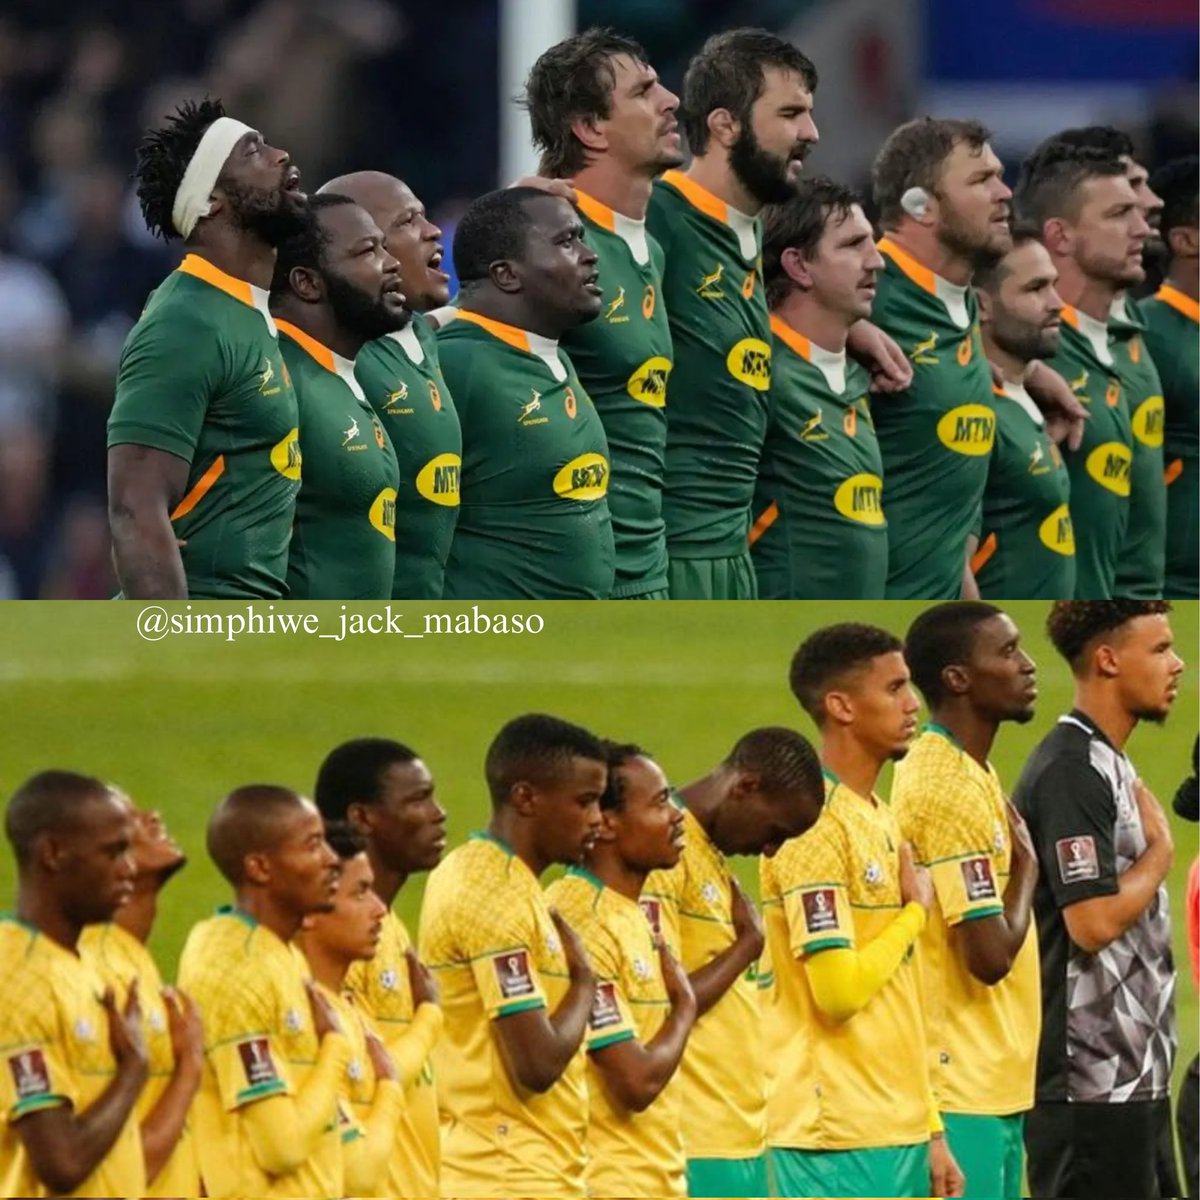 Should @BafanaBafana go to the Final. May we kindly ask @SAFA_net to bring @Springboks to the stadium in Ivory Coast. It will be a huge motivation to the boys. Bafana Bafana Skomota Patrice Motsepe 10 MiNUTES